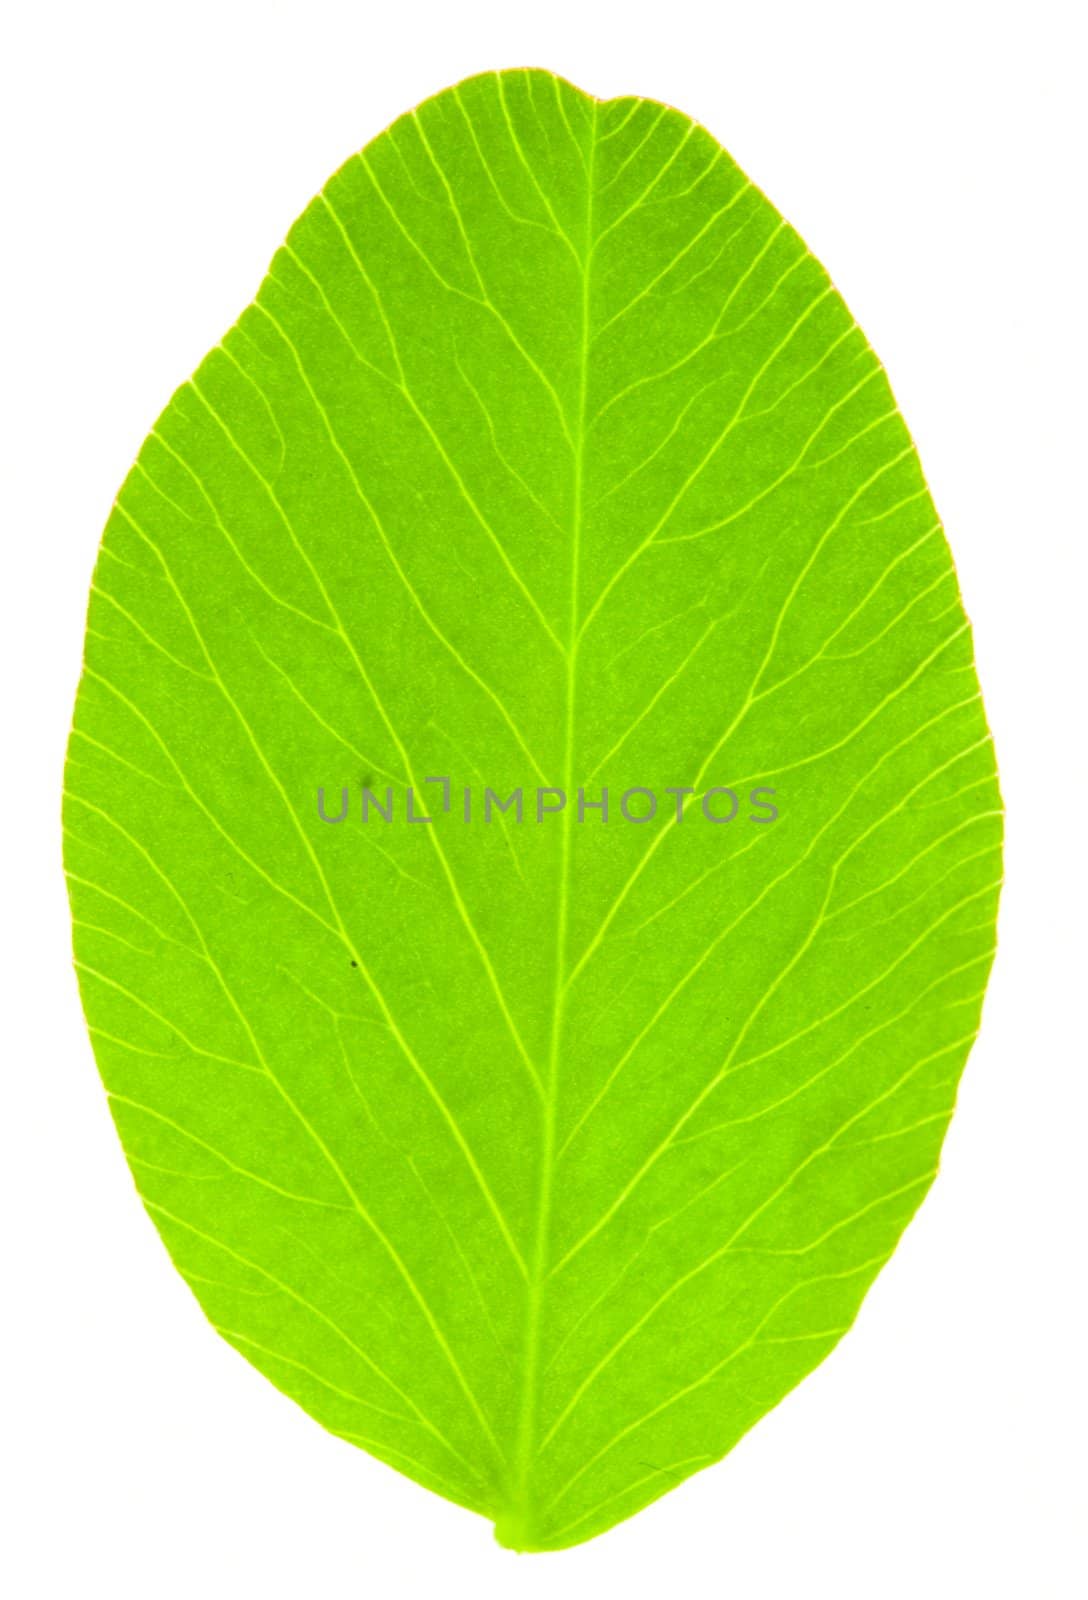 Leaf of Clover by werg